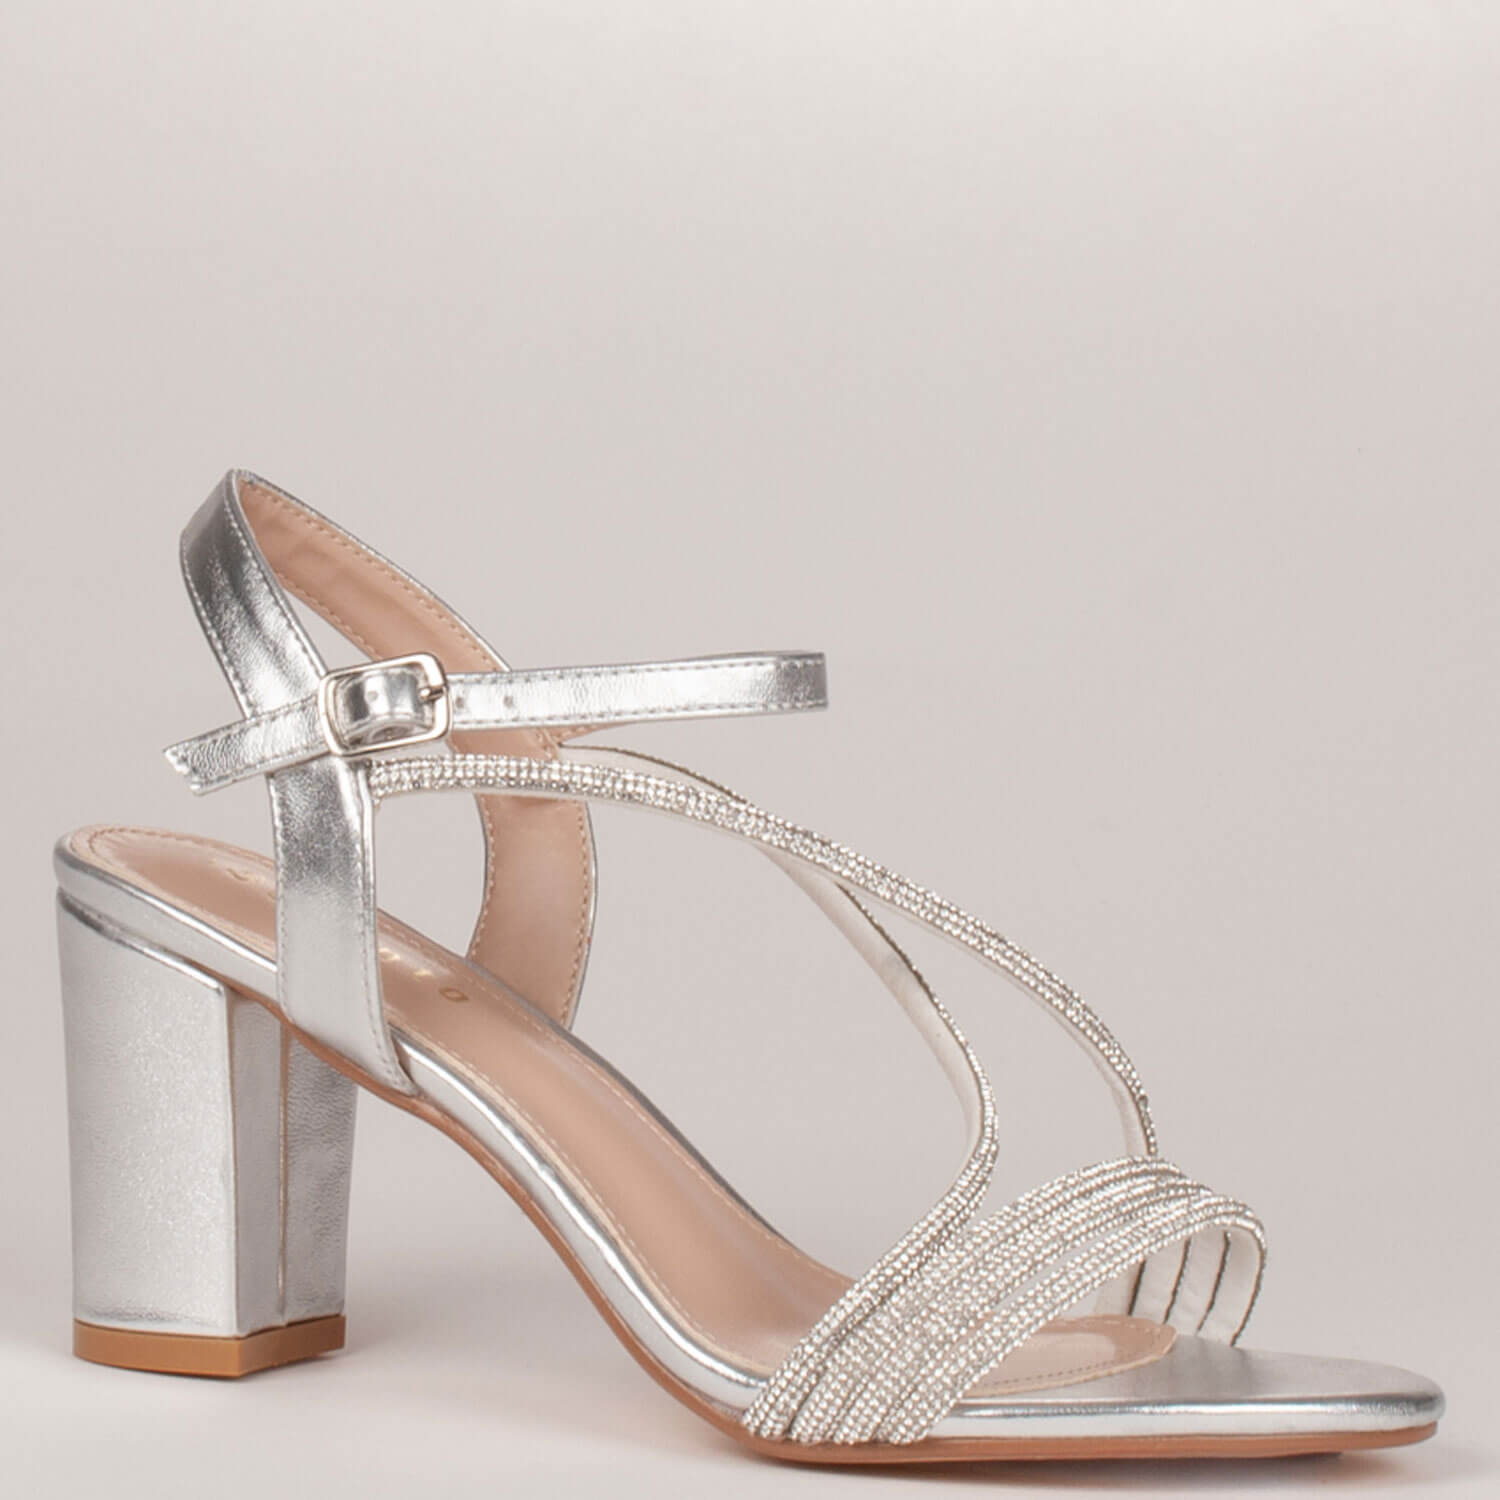 Sorento Cabracastle Heeled Sandal - Silver 1 Shaws Department Stores